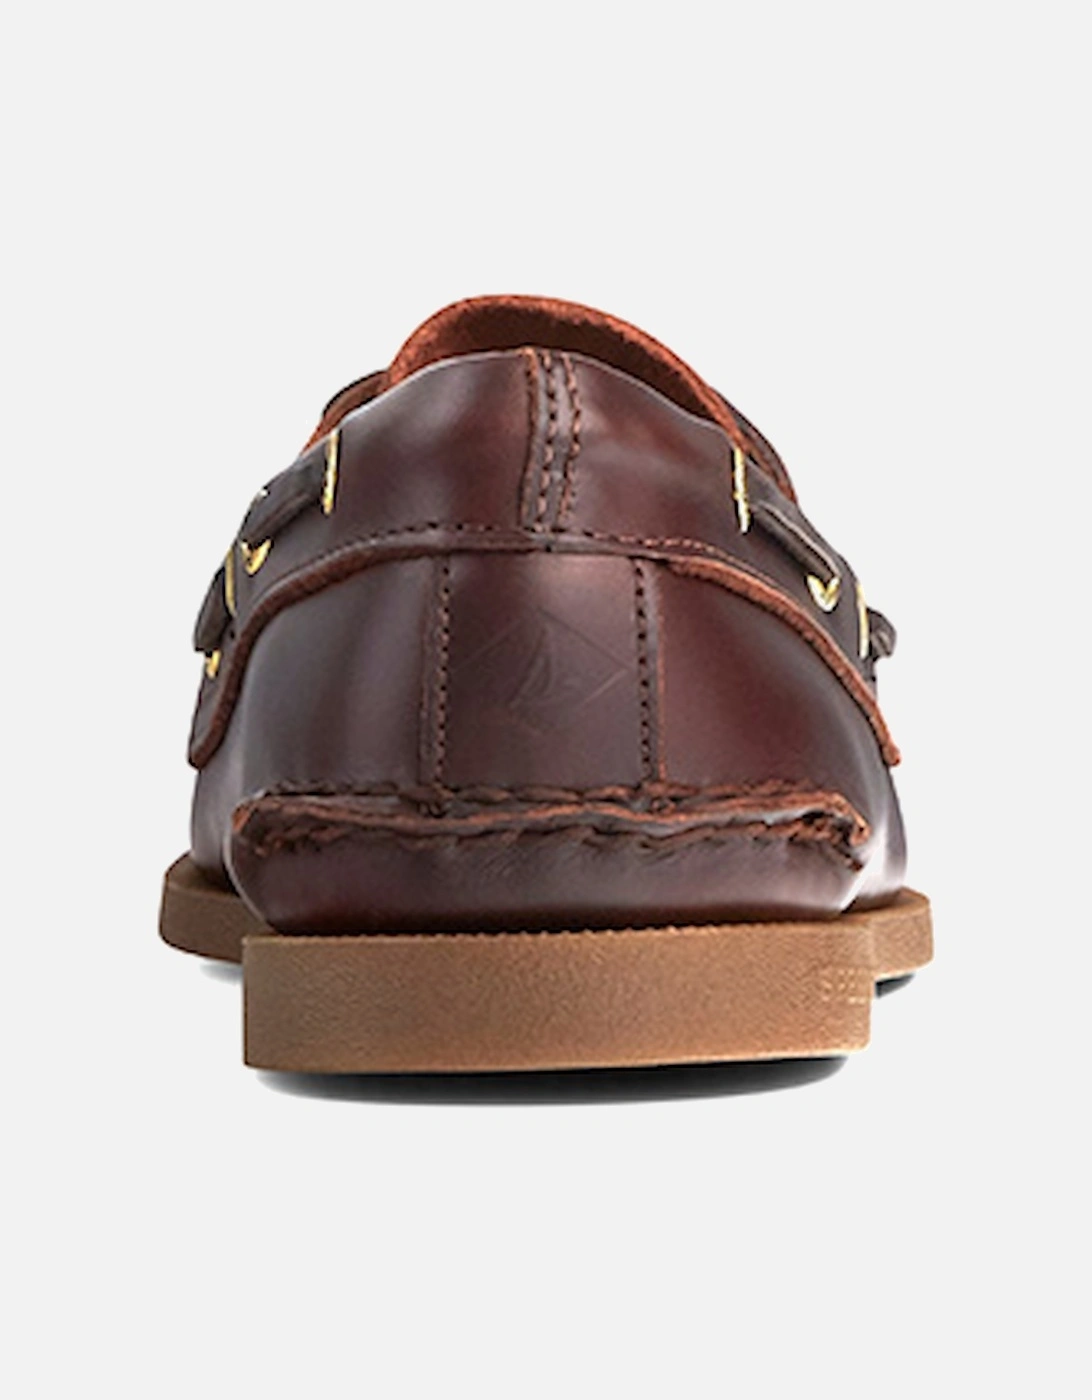 Sperry Men's Authentic Original Leather Boat Shoe Bronze DFS